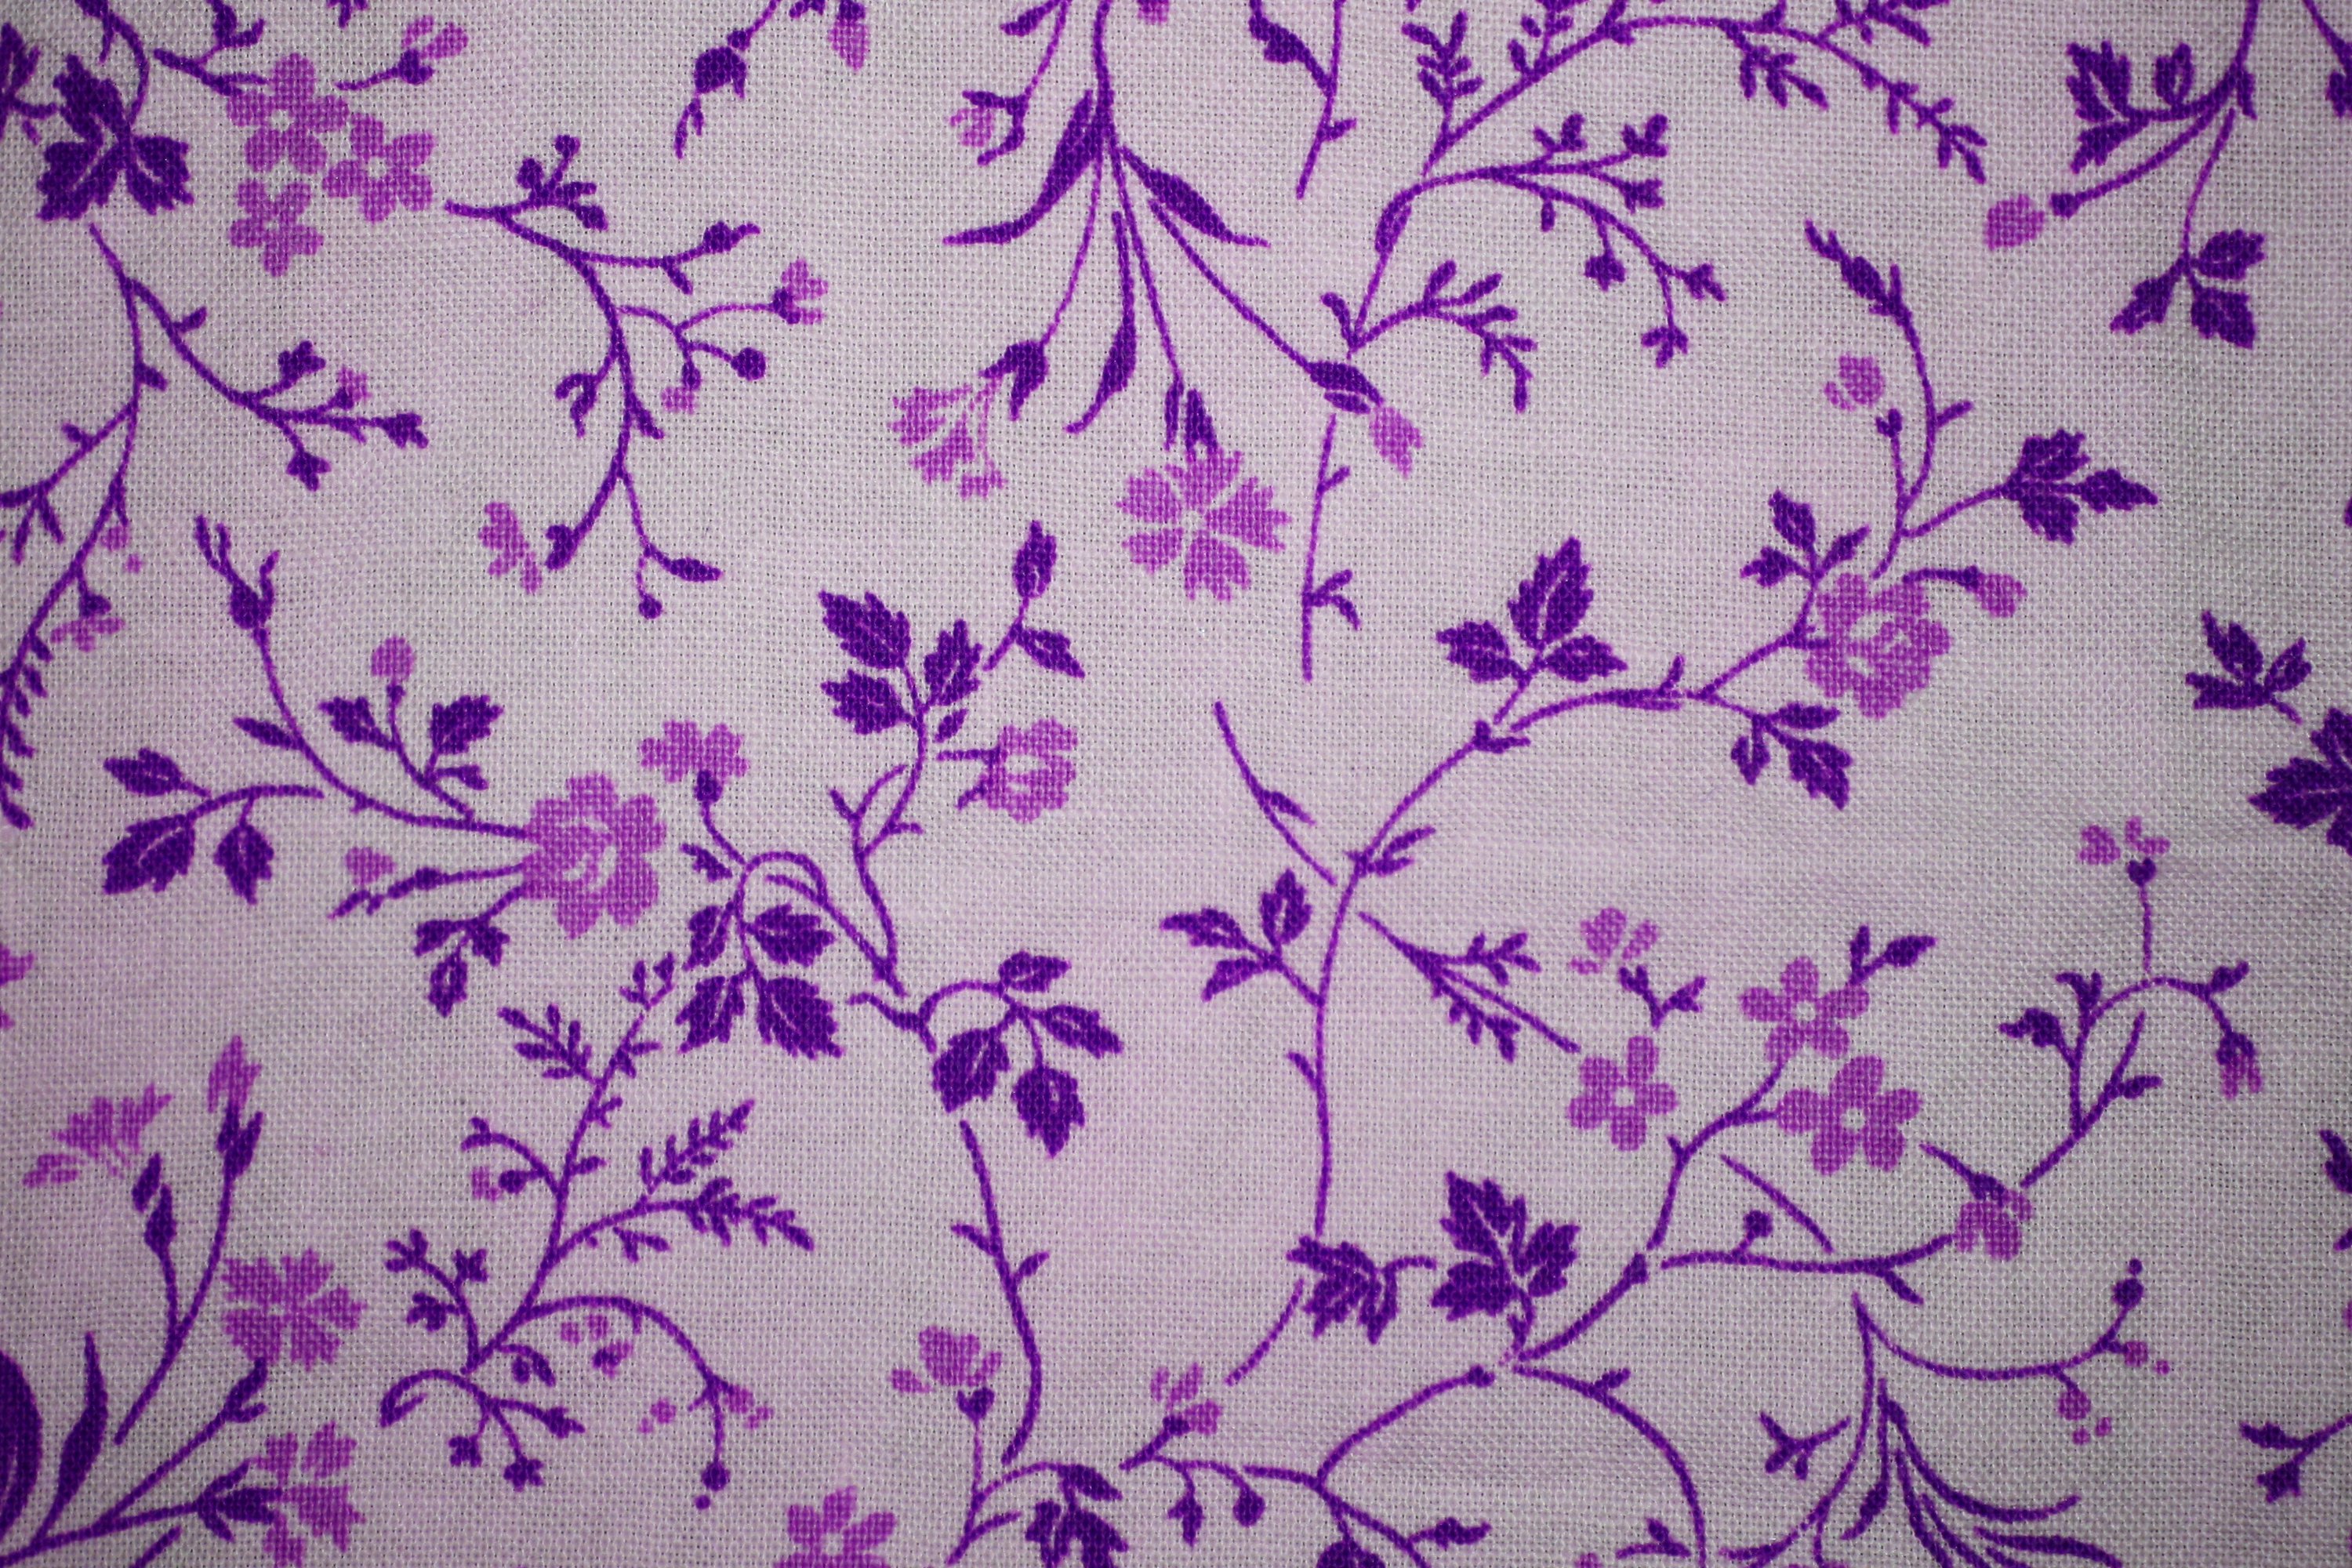 Purple on White Floral Print Fabric Texture Picture. Free Photograph. Photo Public Domain